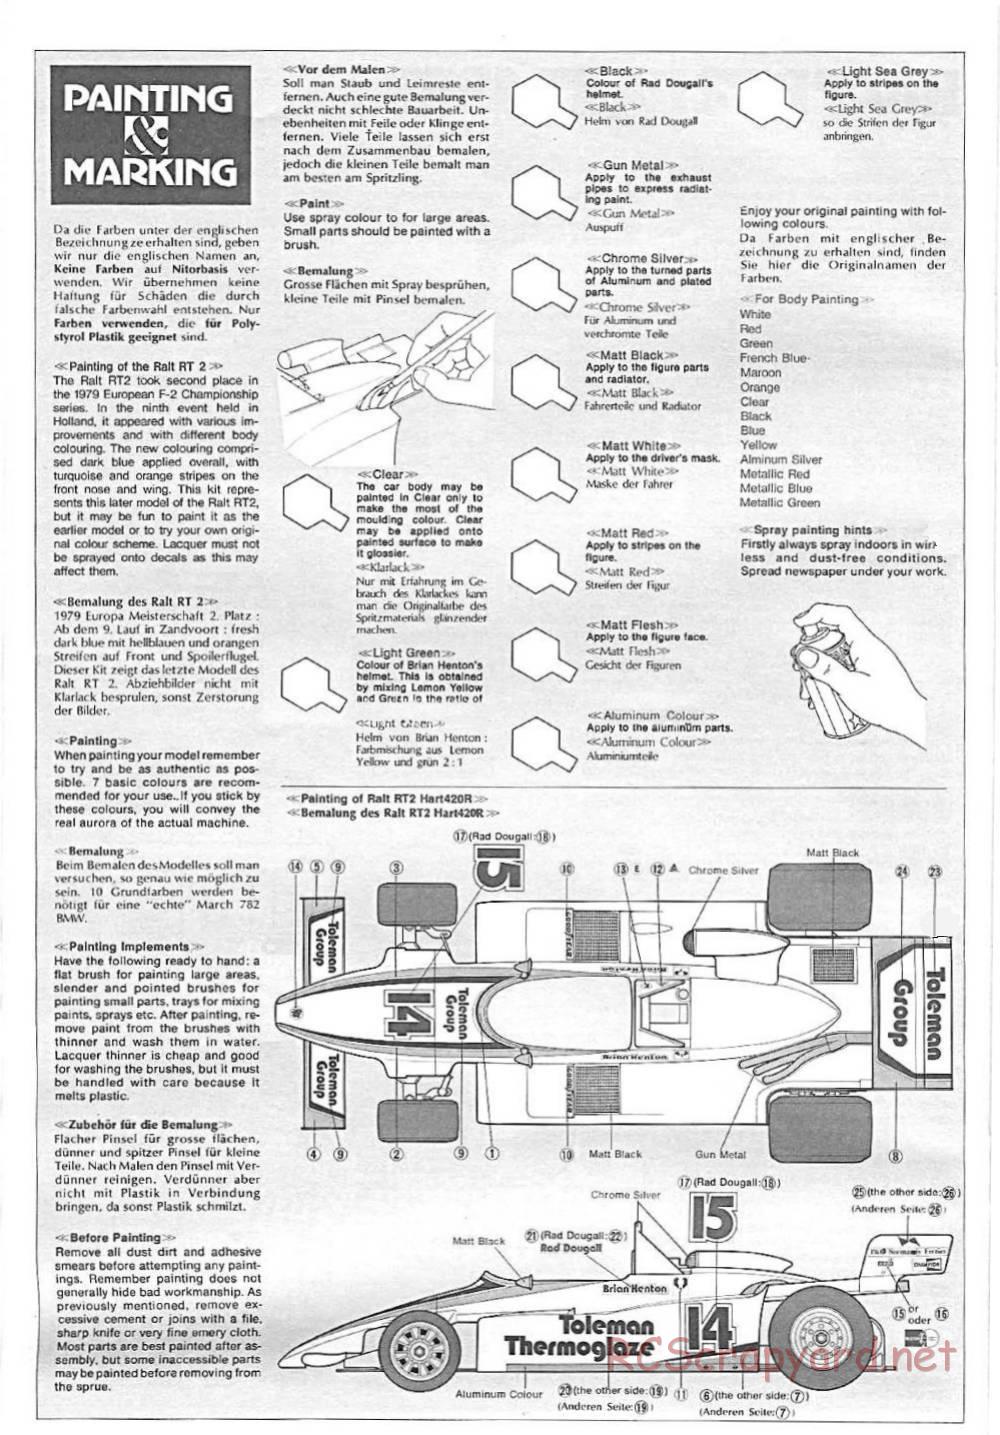 Tamiya - Ralt RT2 Hart 420R (F2) - 58018 - Manual - Page 14